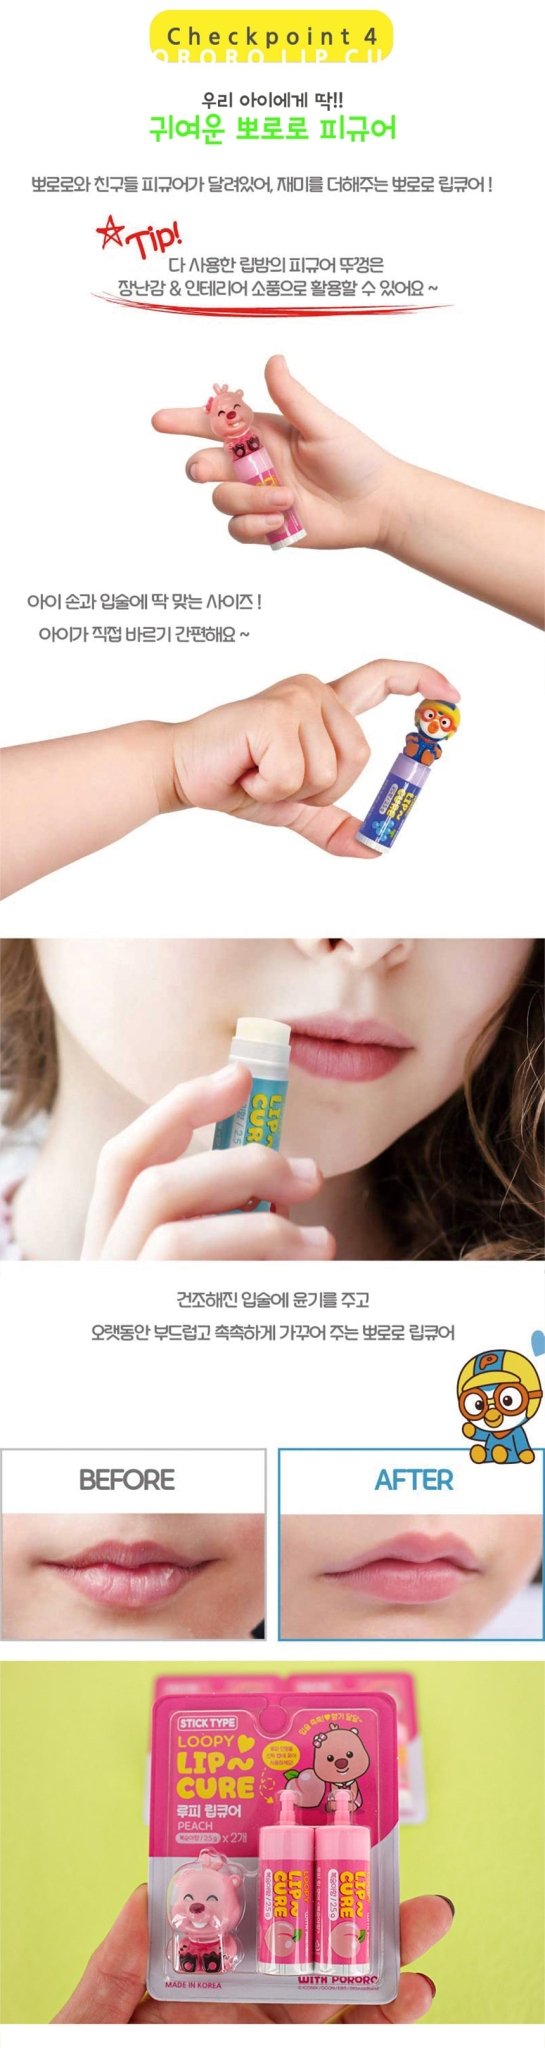 PORORO Loopy Lip Cure 2.5g*2 Sticks - Peach